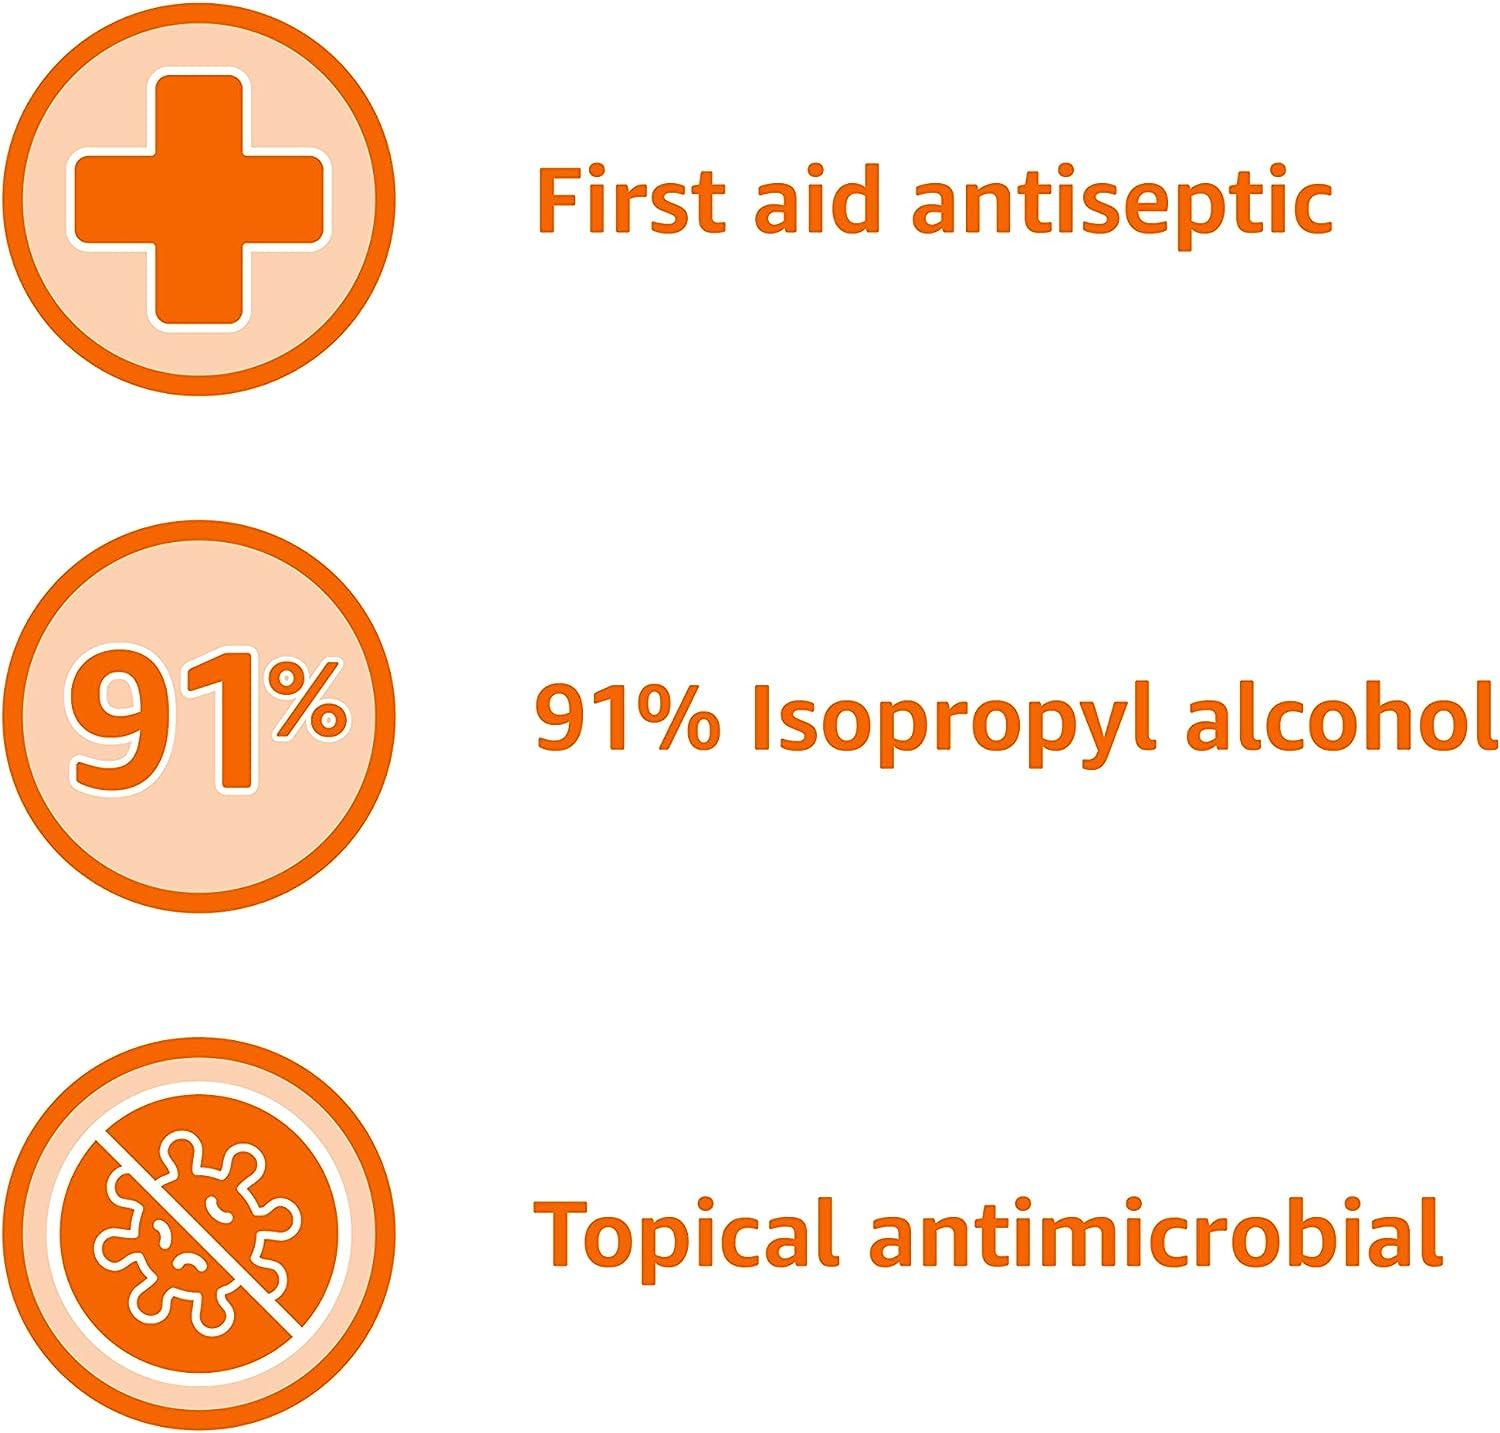 Isopropyl Alcohol Spray, First Aid Antiseptic Spray